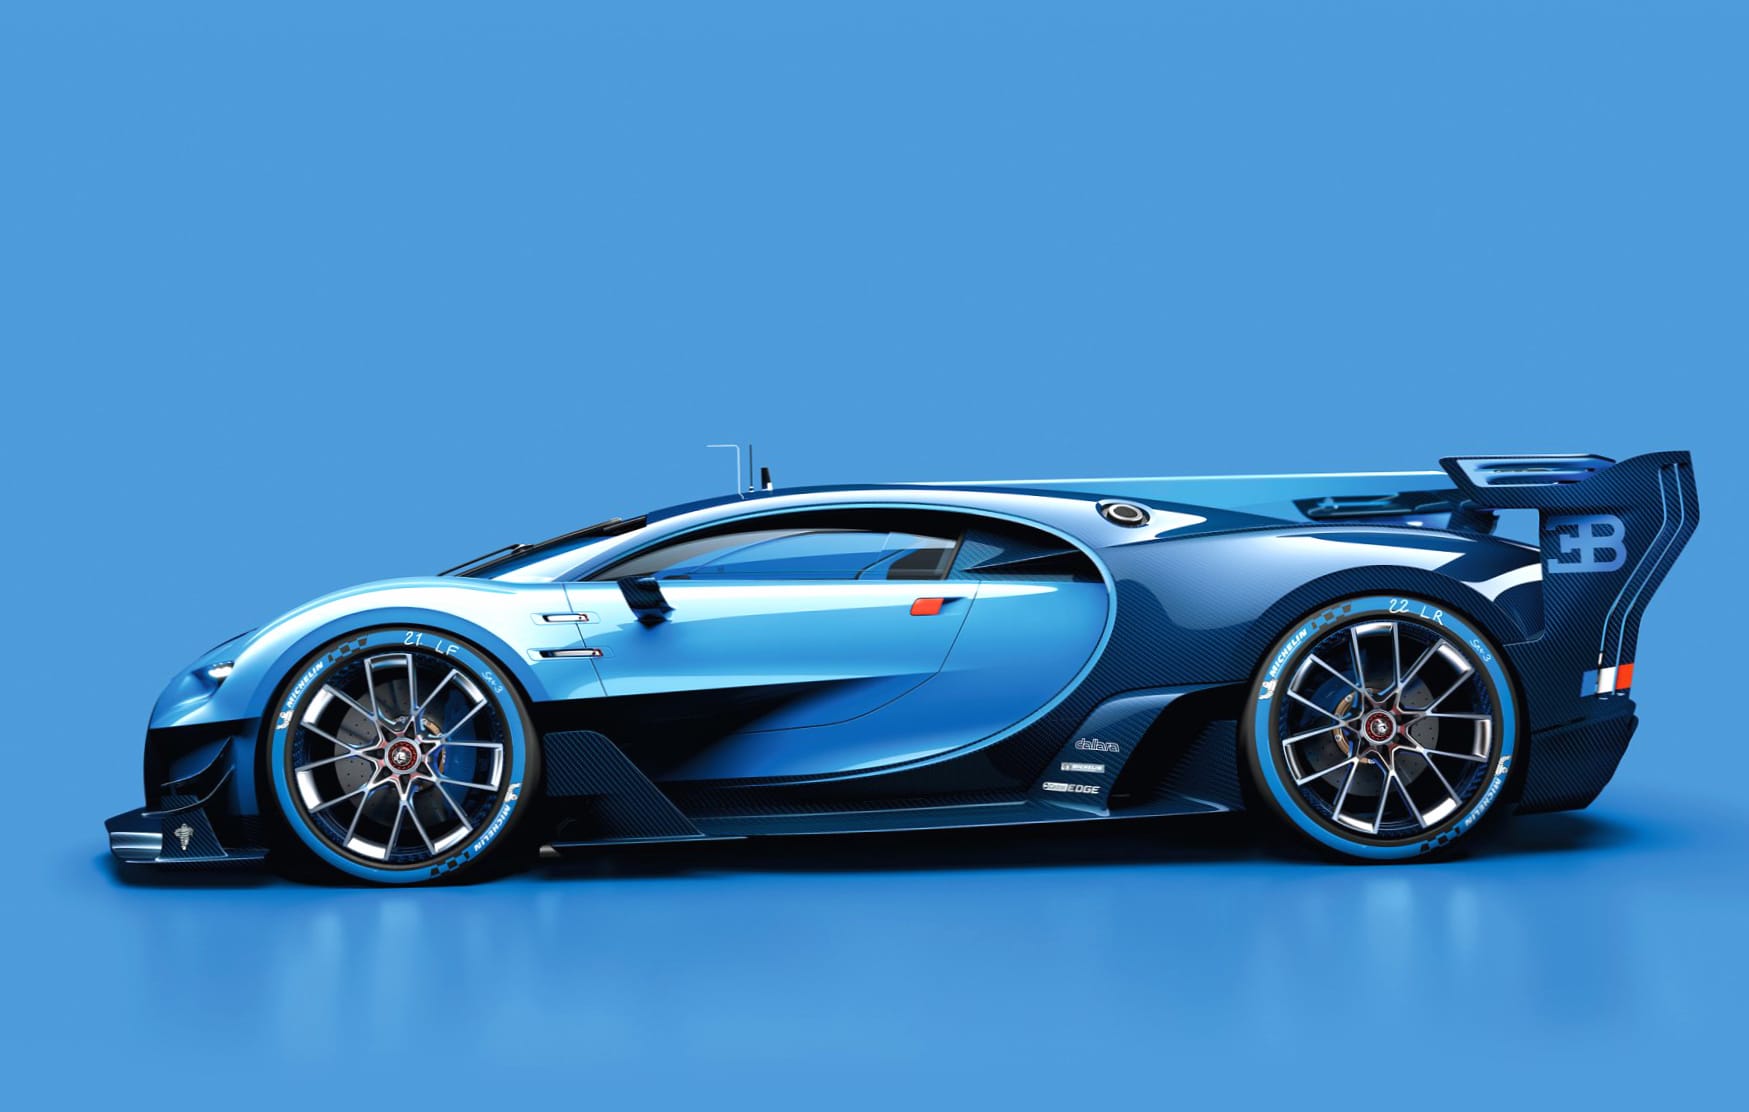 Bugatti Vision Gran Turismo at 1280 x 960 size wallpapers HD quality